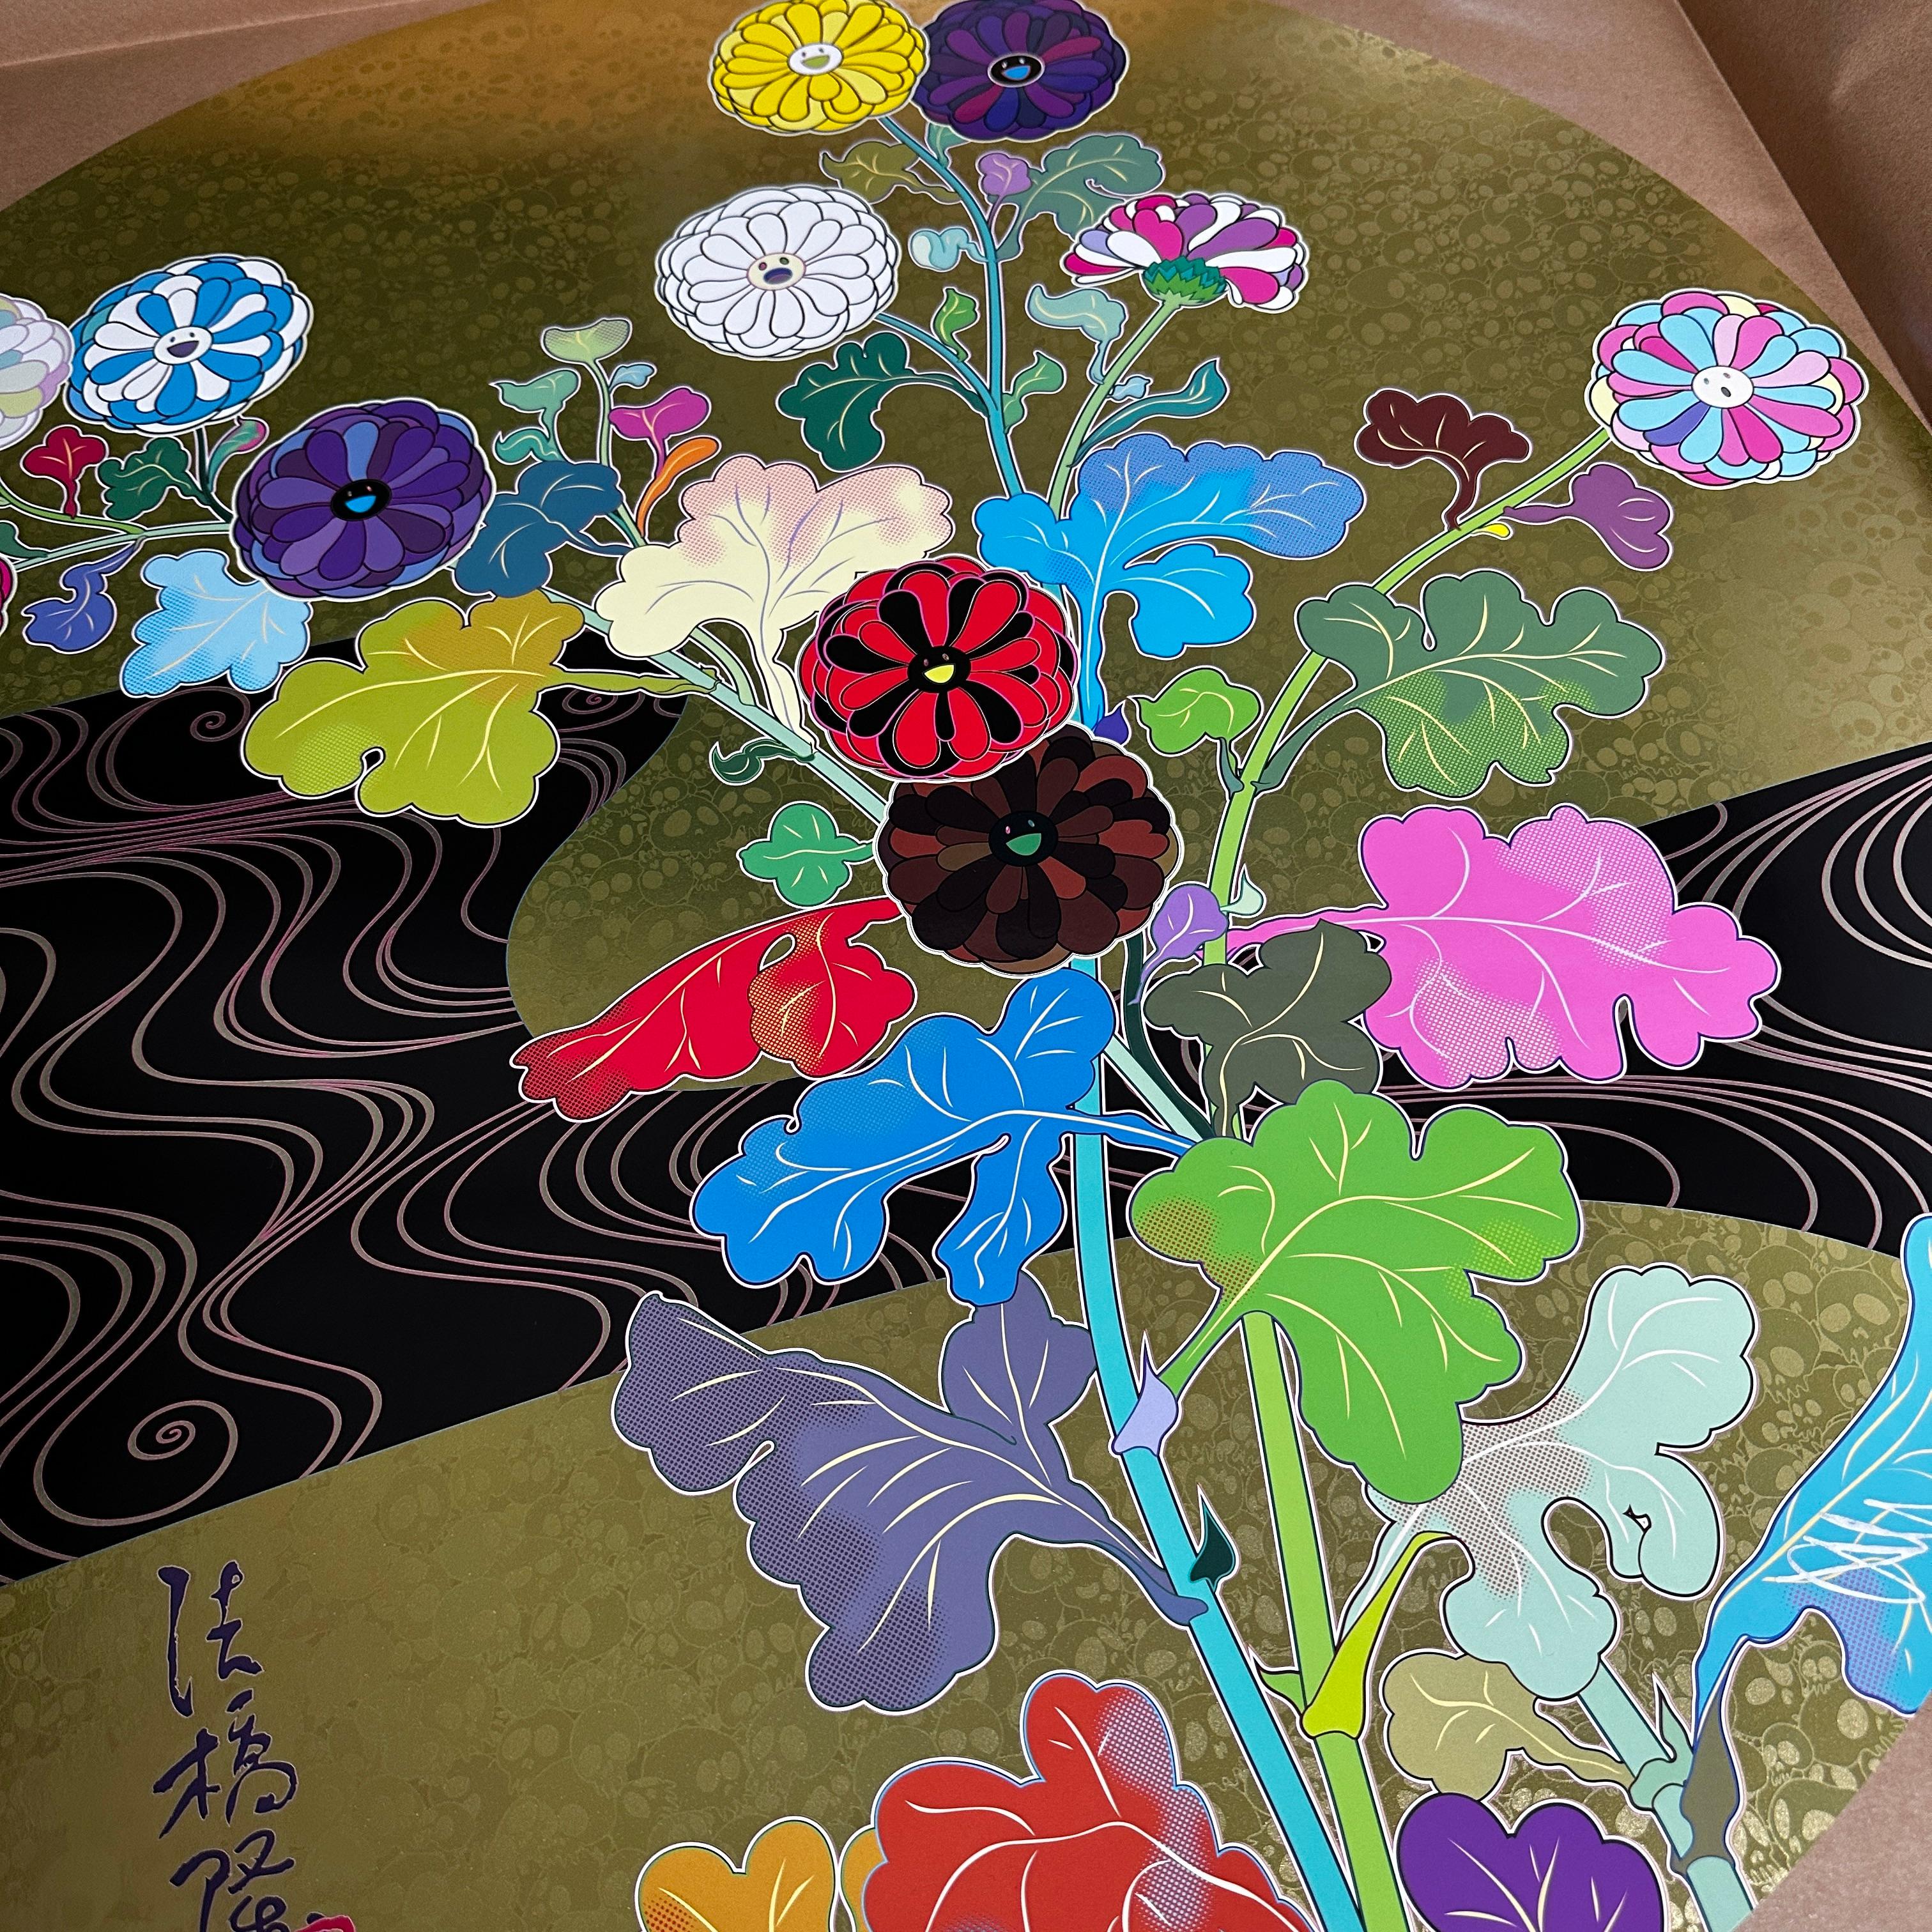 Korin: The Golden River (Japan, Takashi Murakami, Tokyo, Flowers) 1